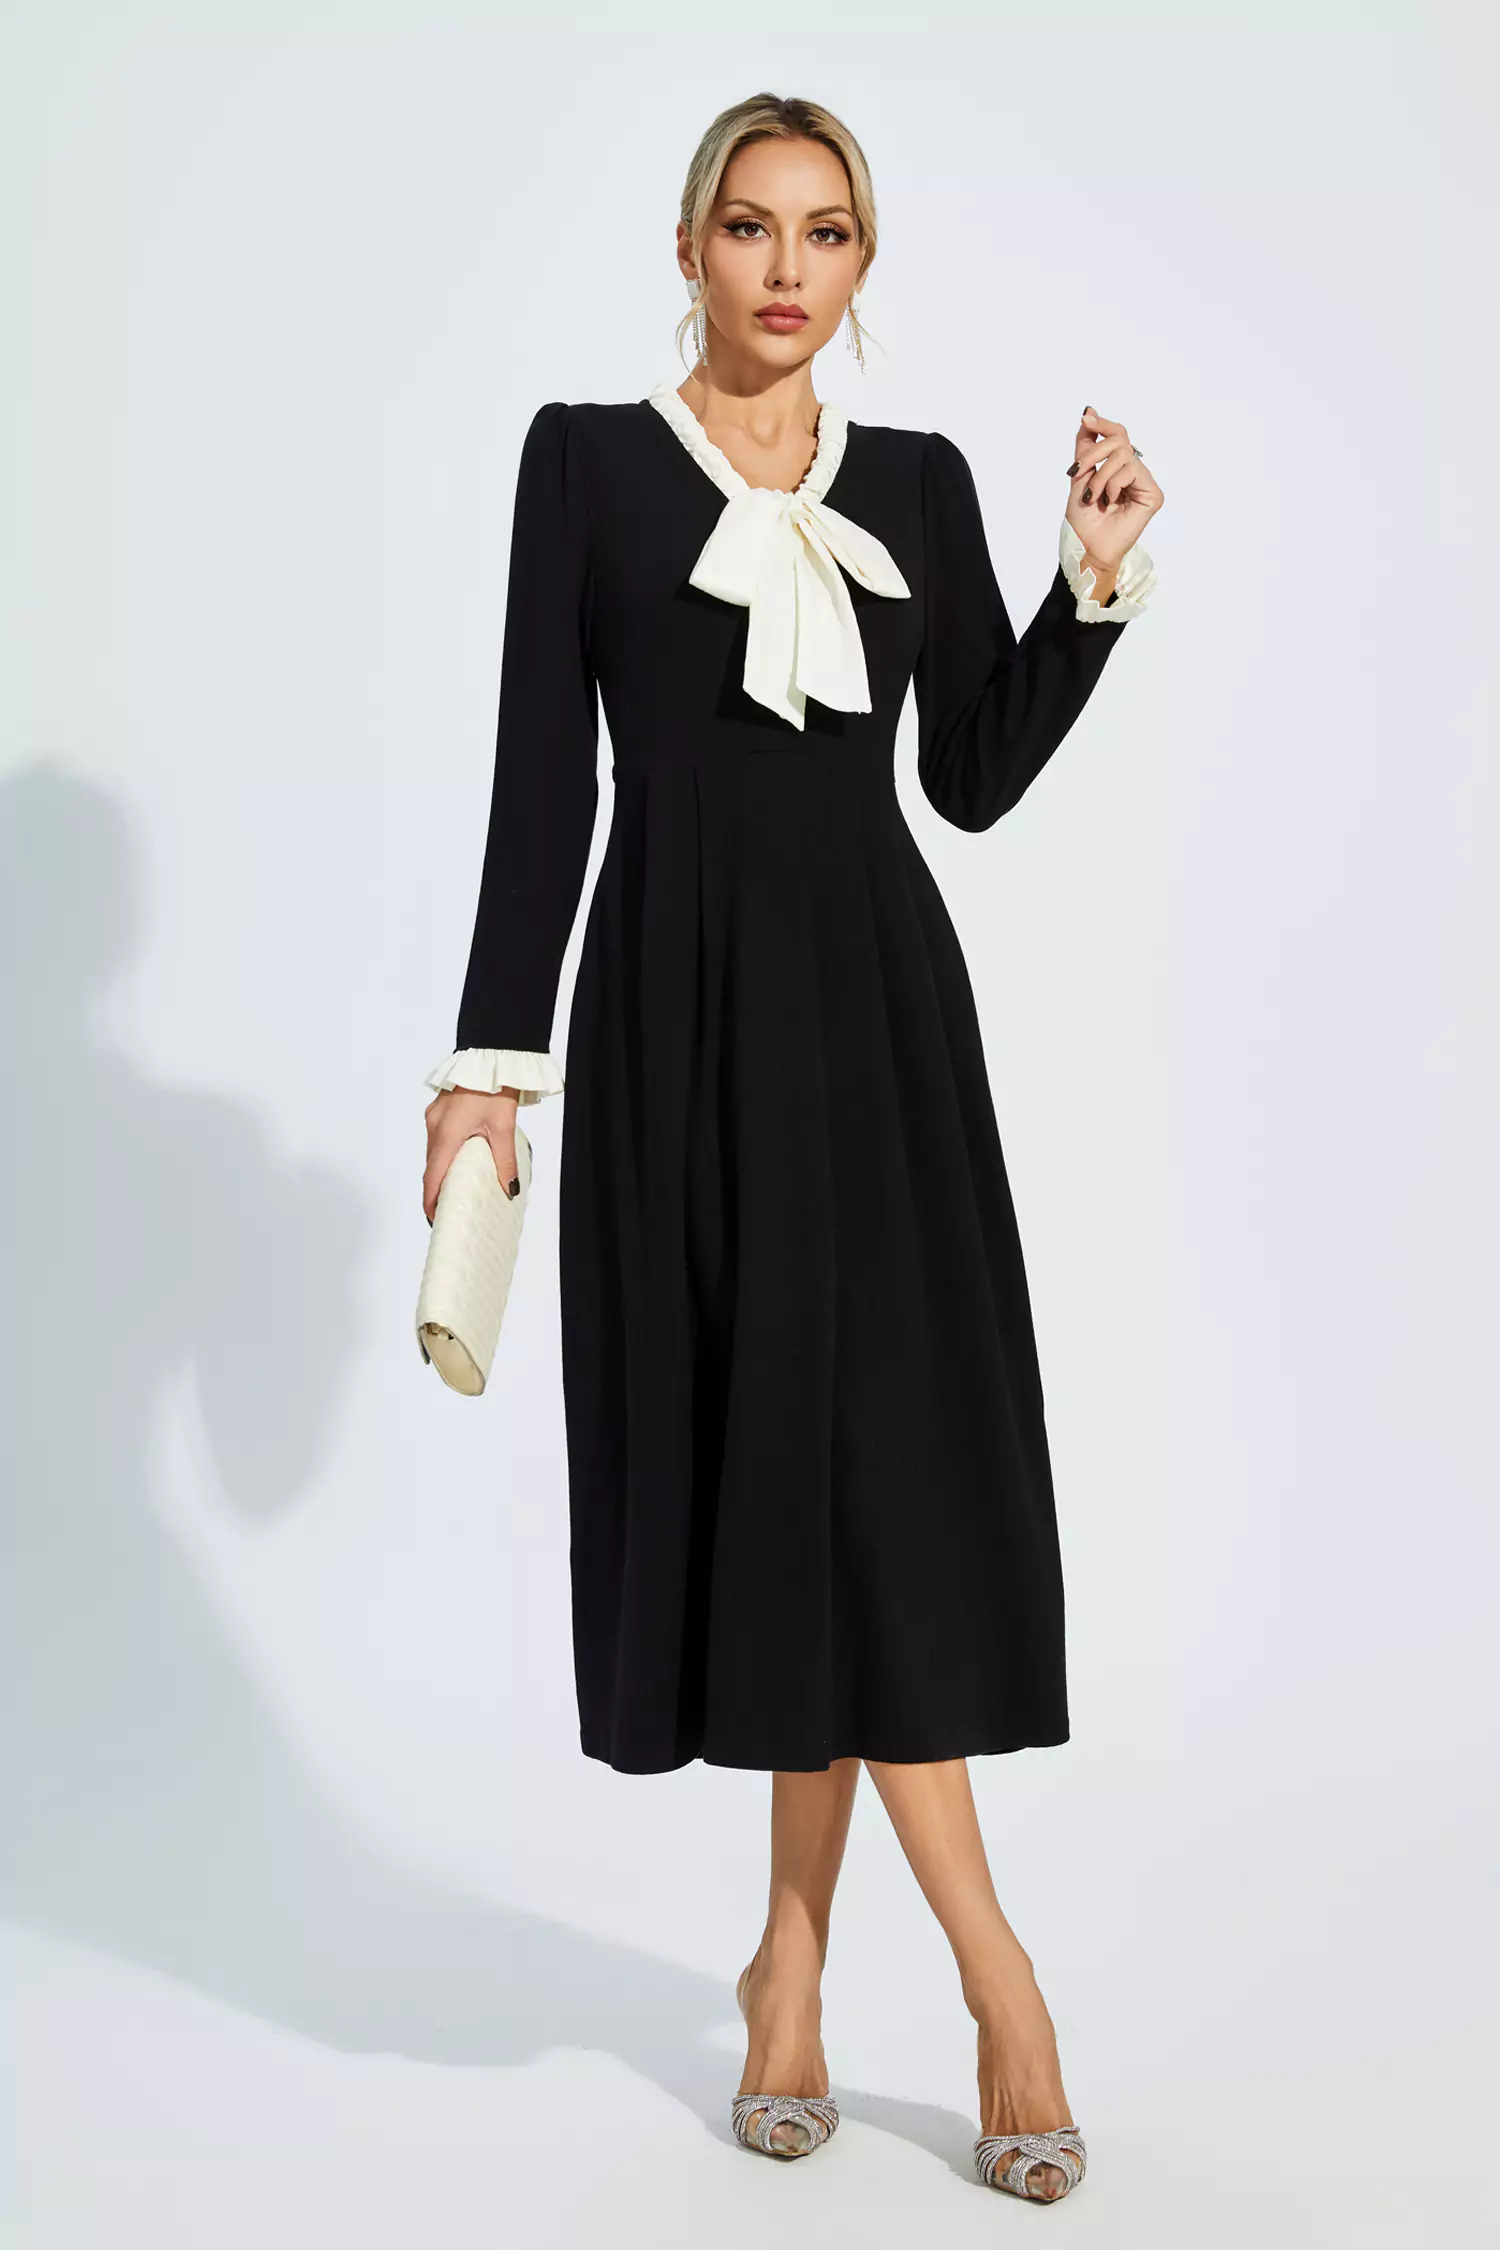 Mikaela Black Bow-knot Long Sleeve Dress